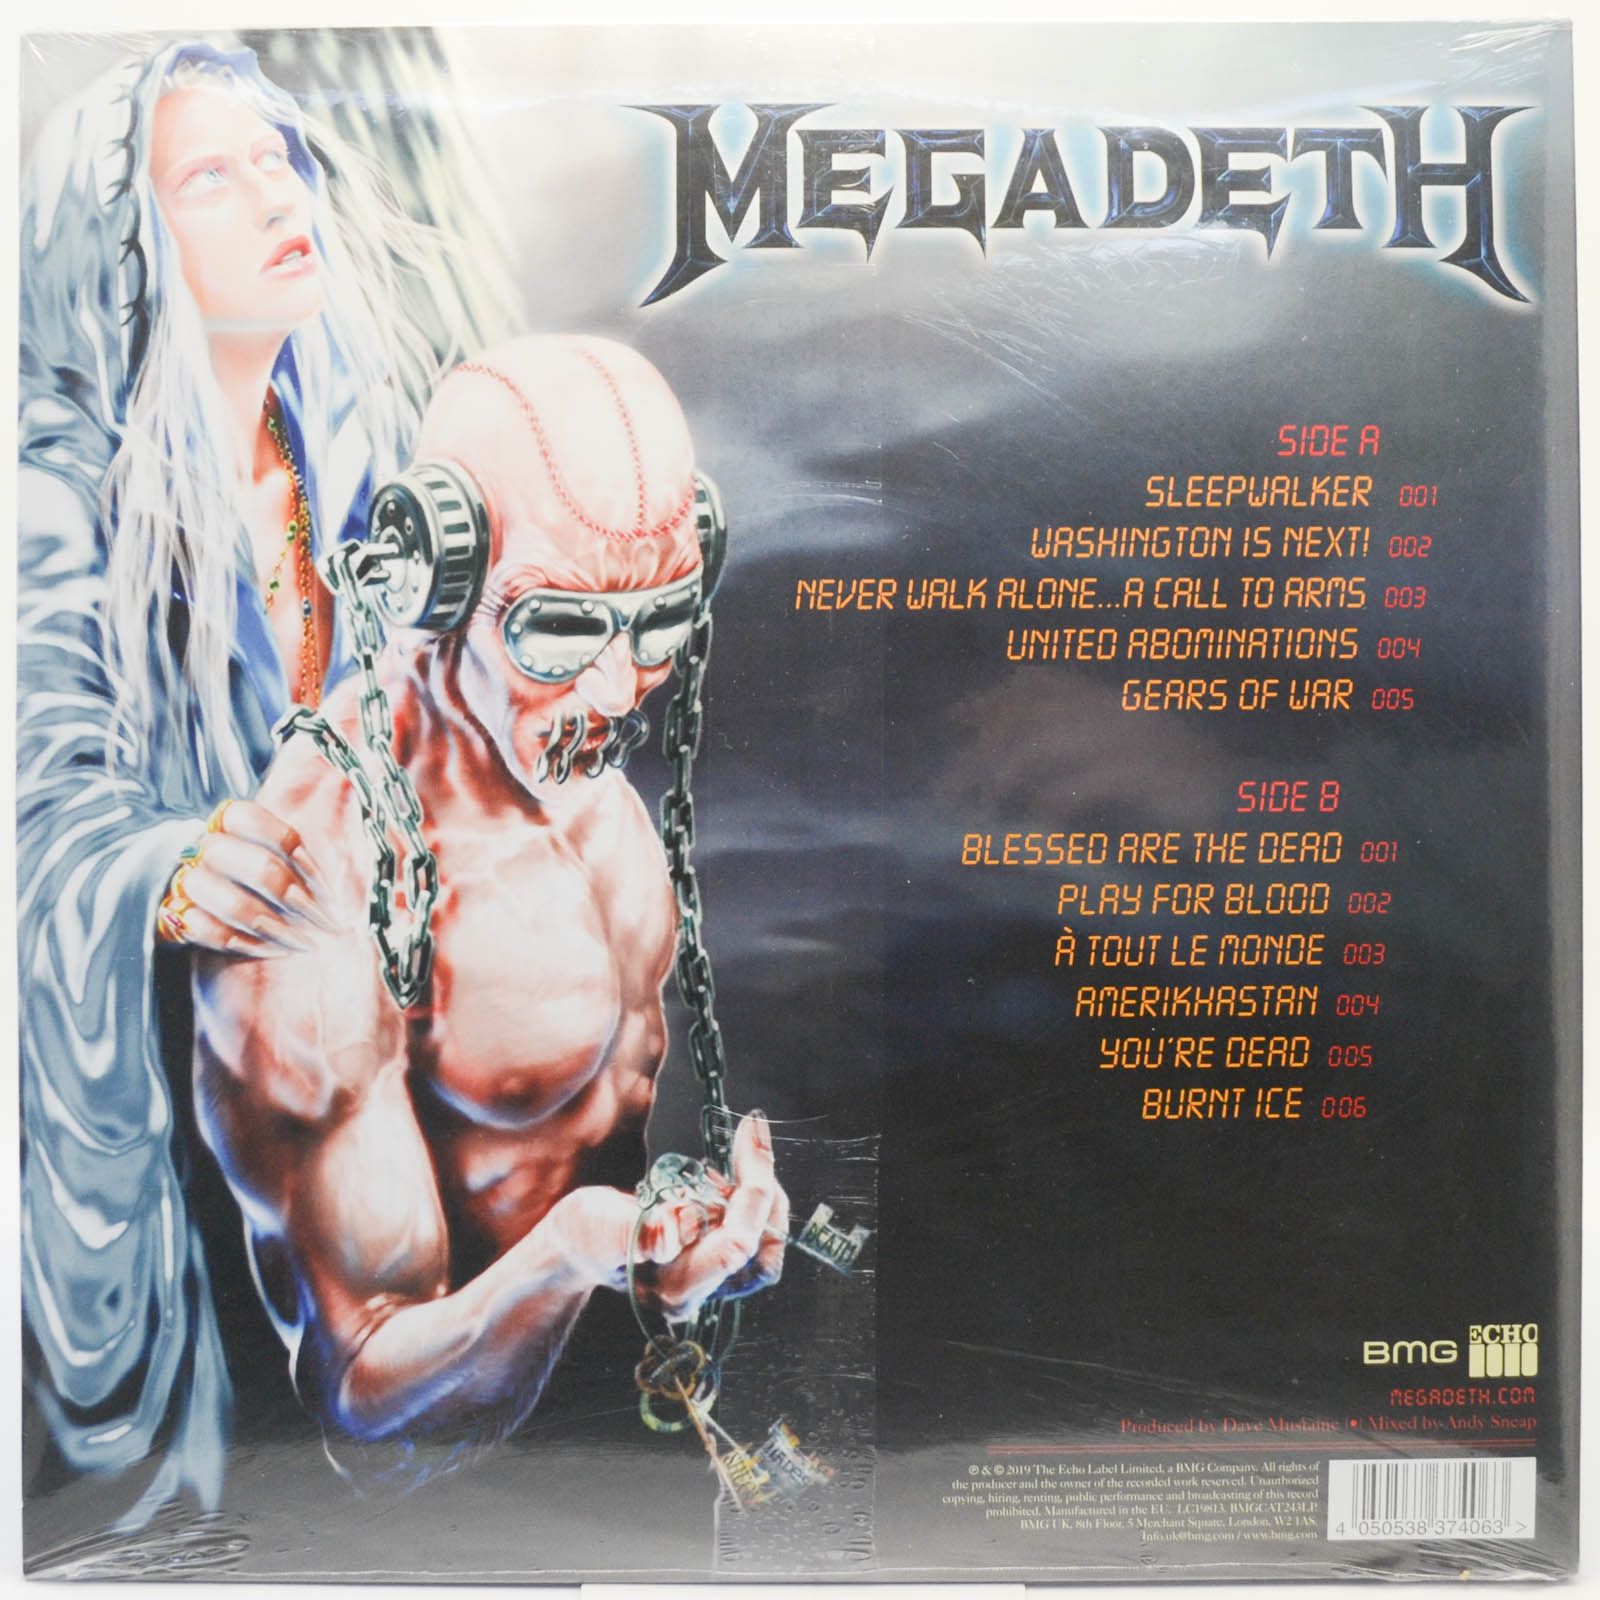 Megadeth — United Abominations, 2007